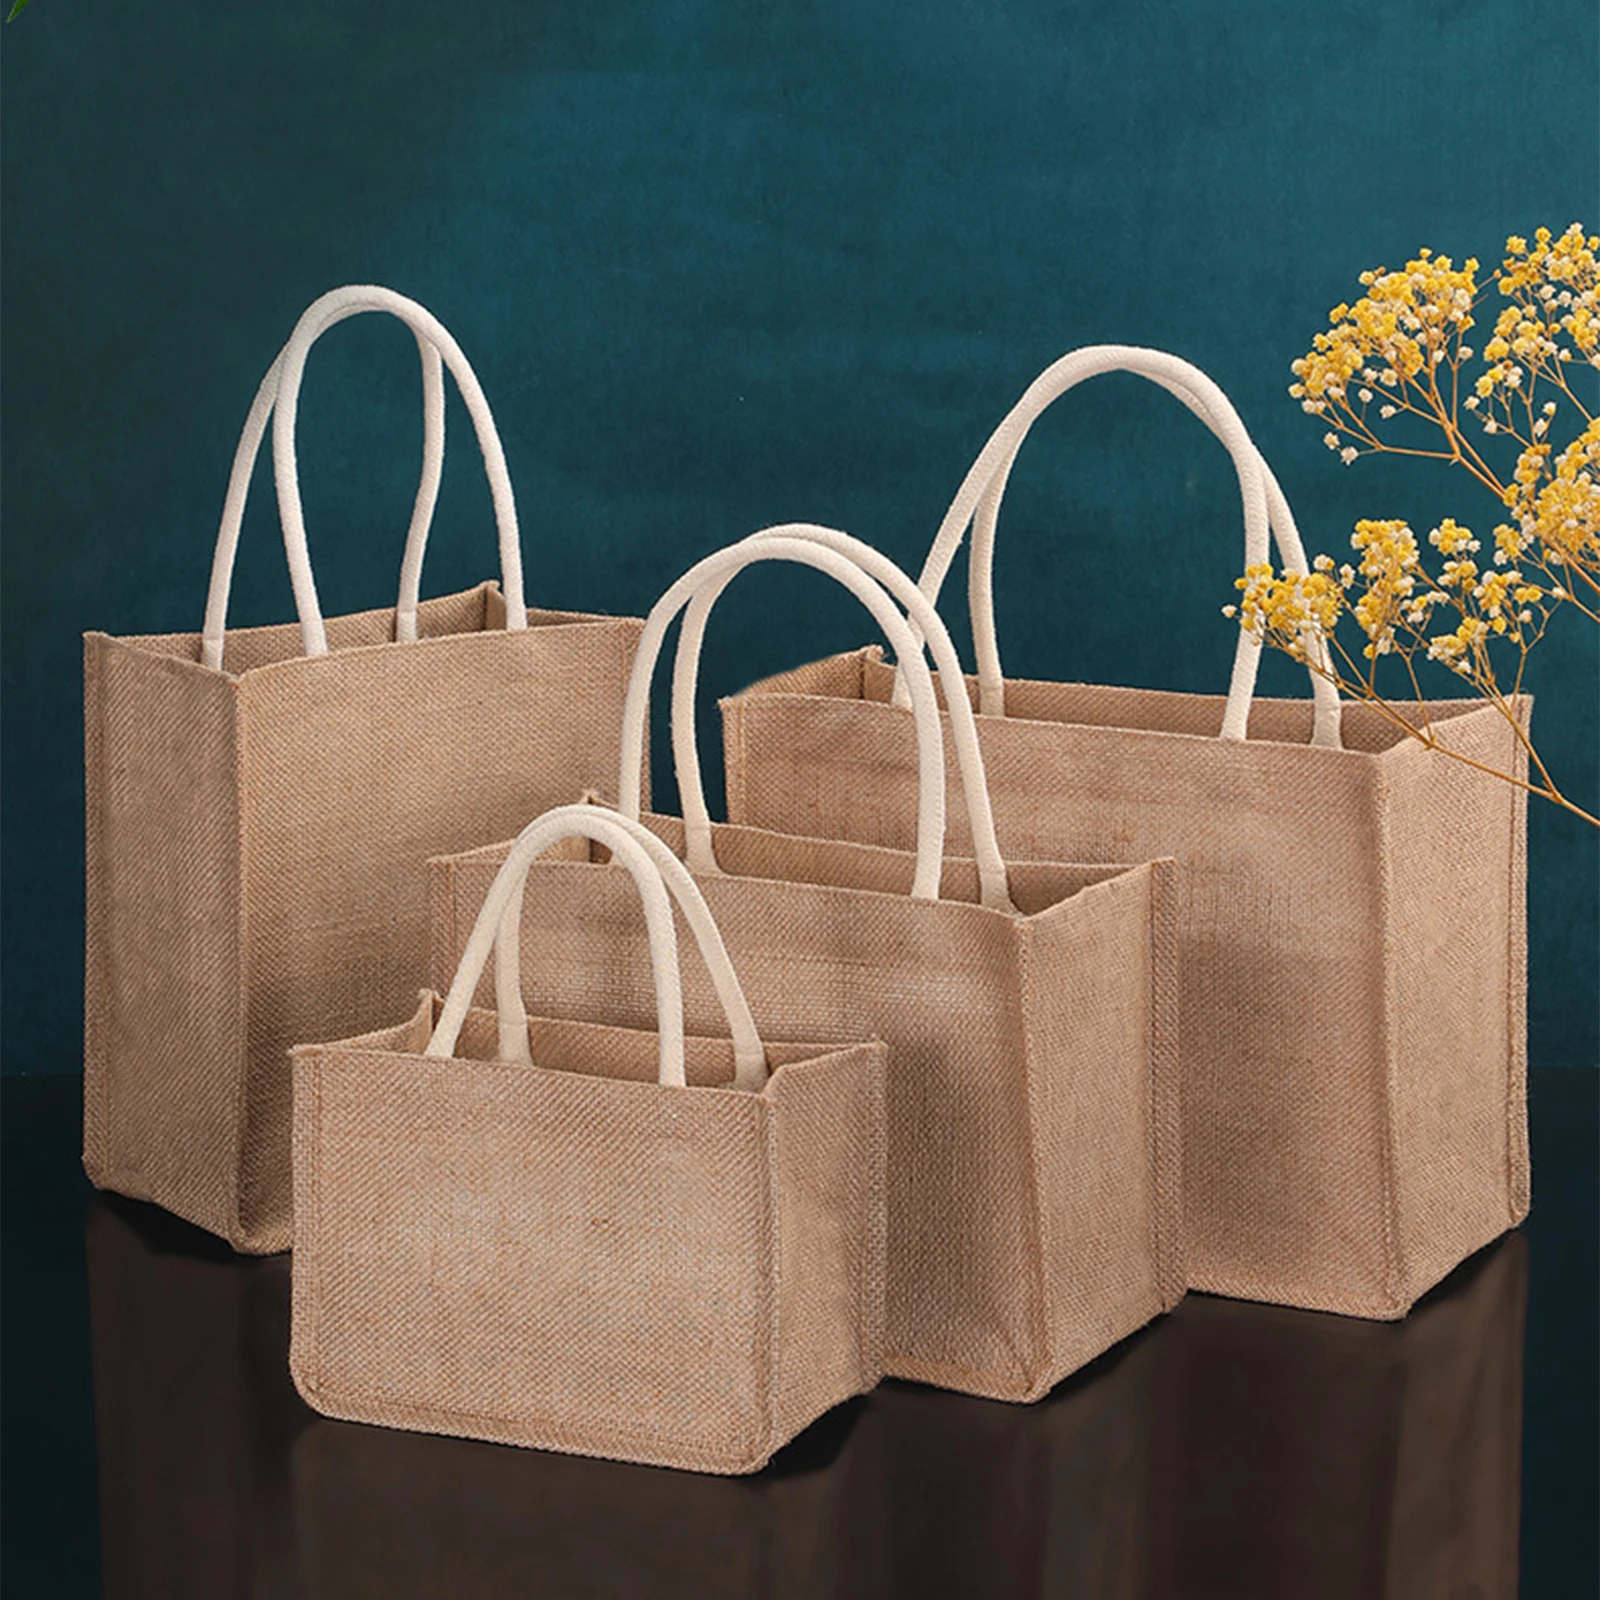 

Eco Friendly Tote Bag Portable Reusable Linen Burlap Shopping Handbag Shoulder Bag Top Handles Carrying Grocery Gift Storage Bag